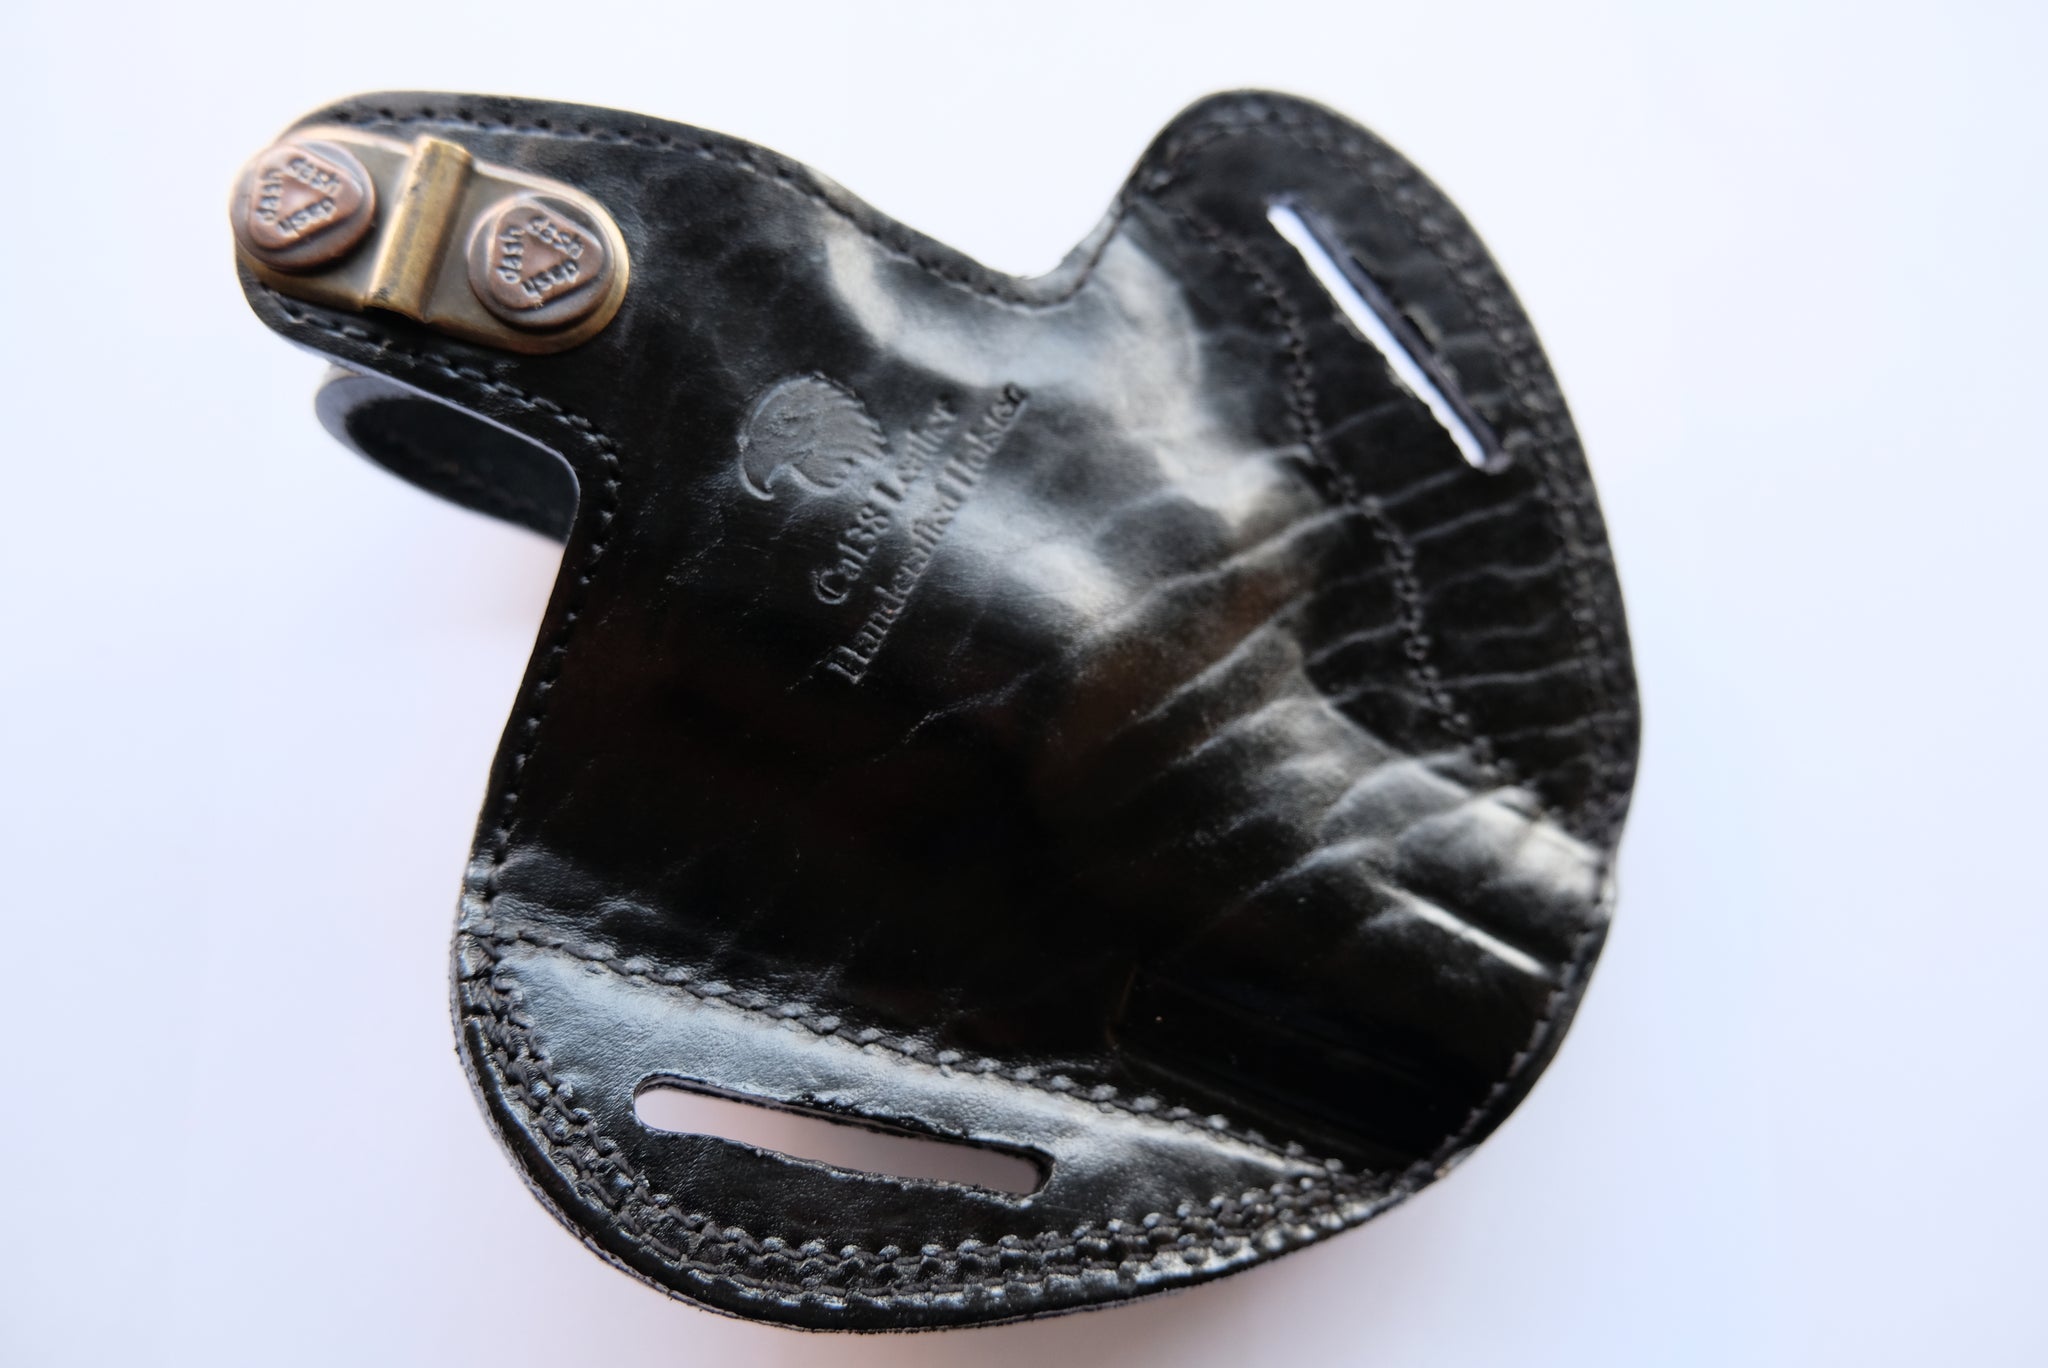 Taurus Tracker Snubnose 44 Magnum Handcrafted Leather Belt owb Holster ...